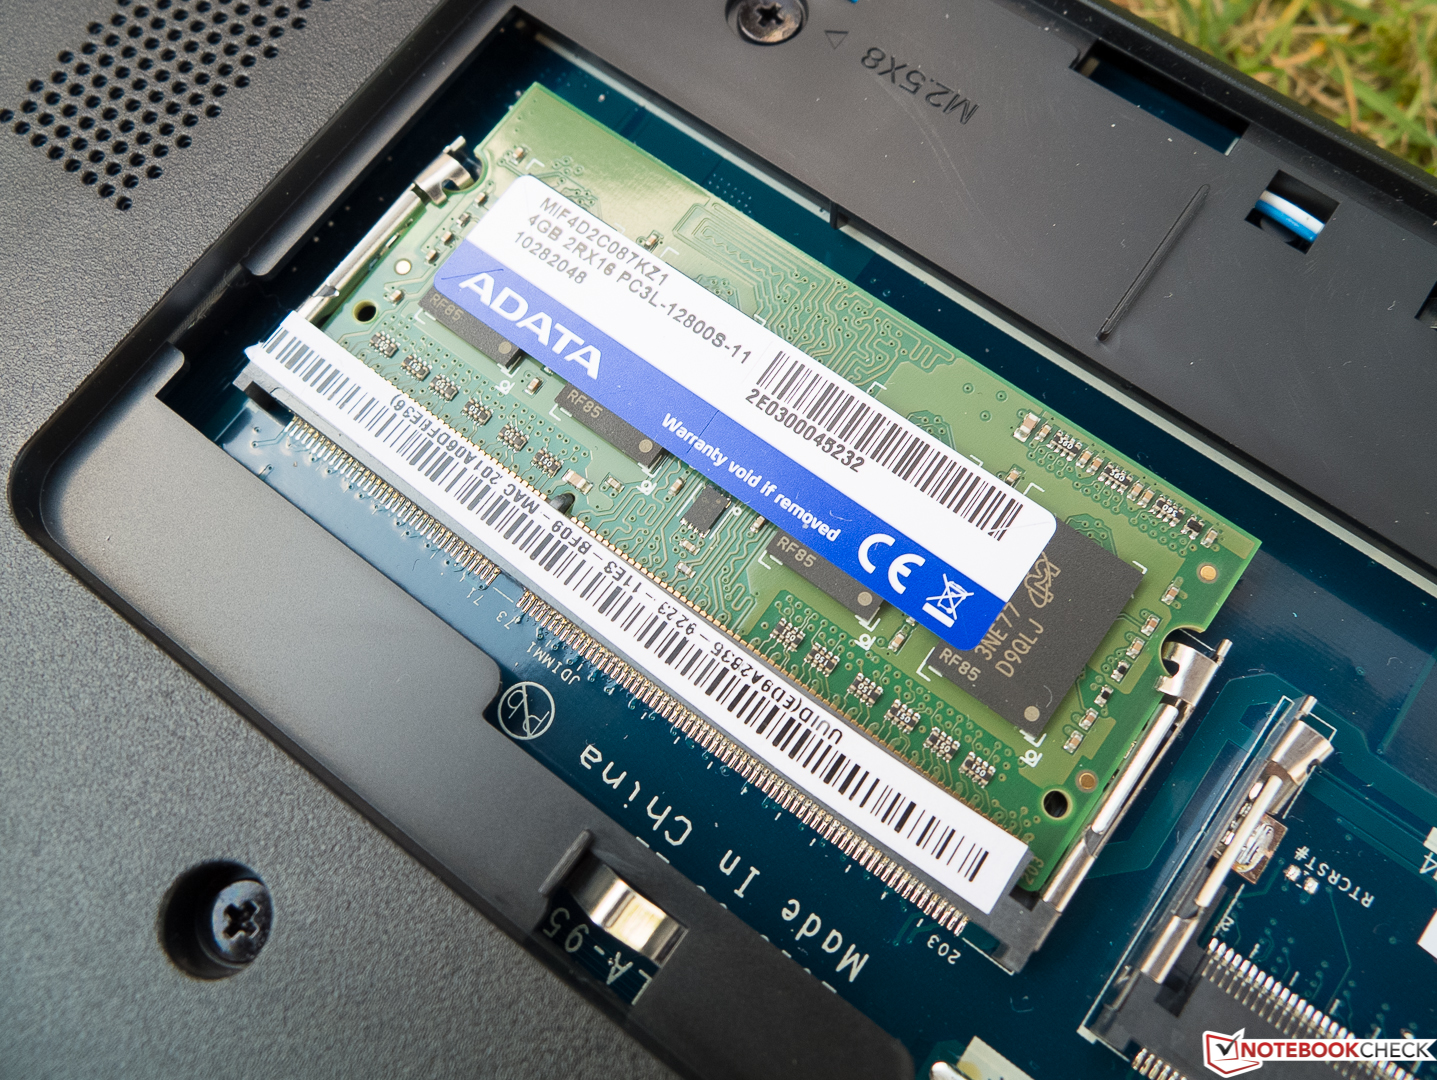 Lenovo g50 оперативная память. Acer Aspire e1 572g Оперативная память. Acer Aspire 3 Оперативная память. Acer Aspire 5742g Оперативная память. Ноутбук Acer Aspire e15 слоты для ОЗУ.